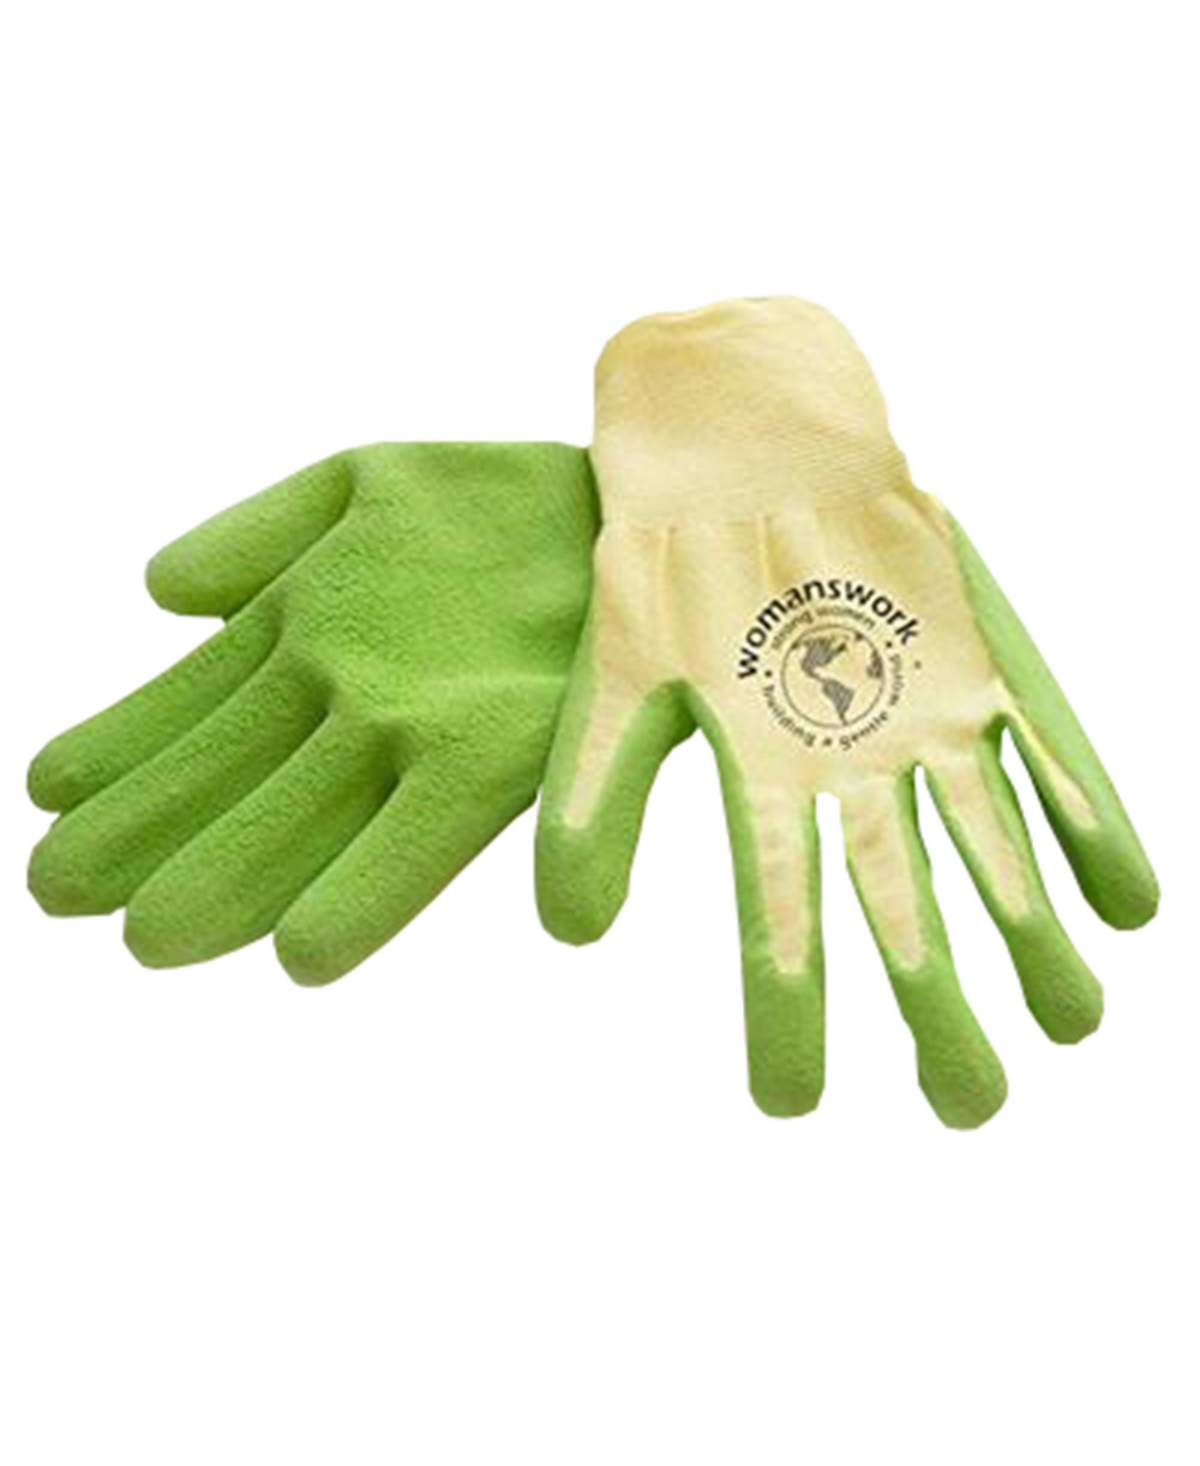 440G Weeder Gloves, Large, Green Pack of 1 - Green